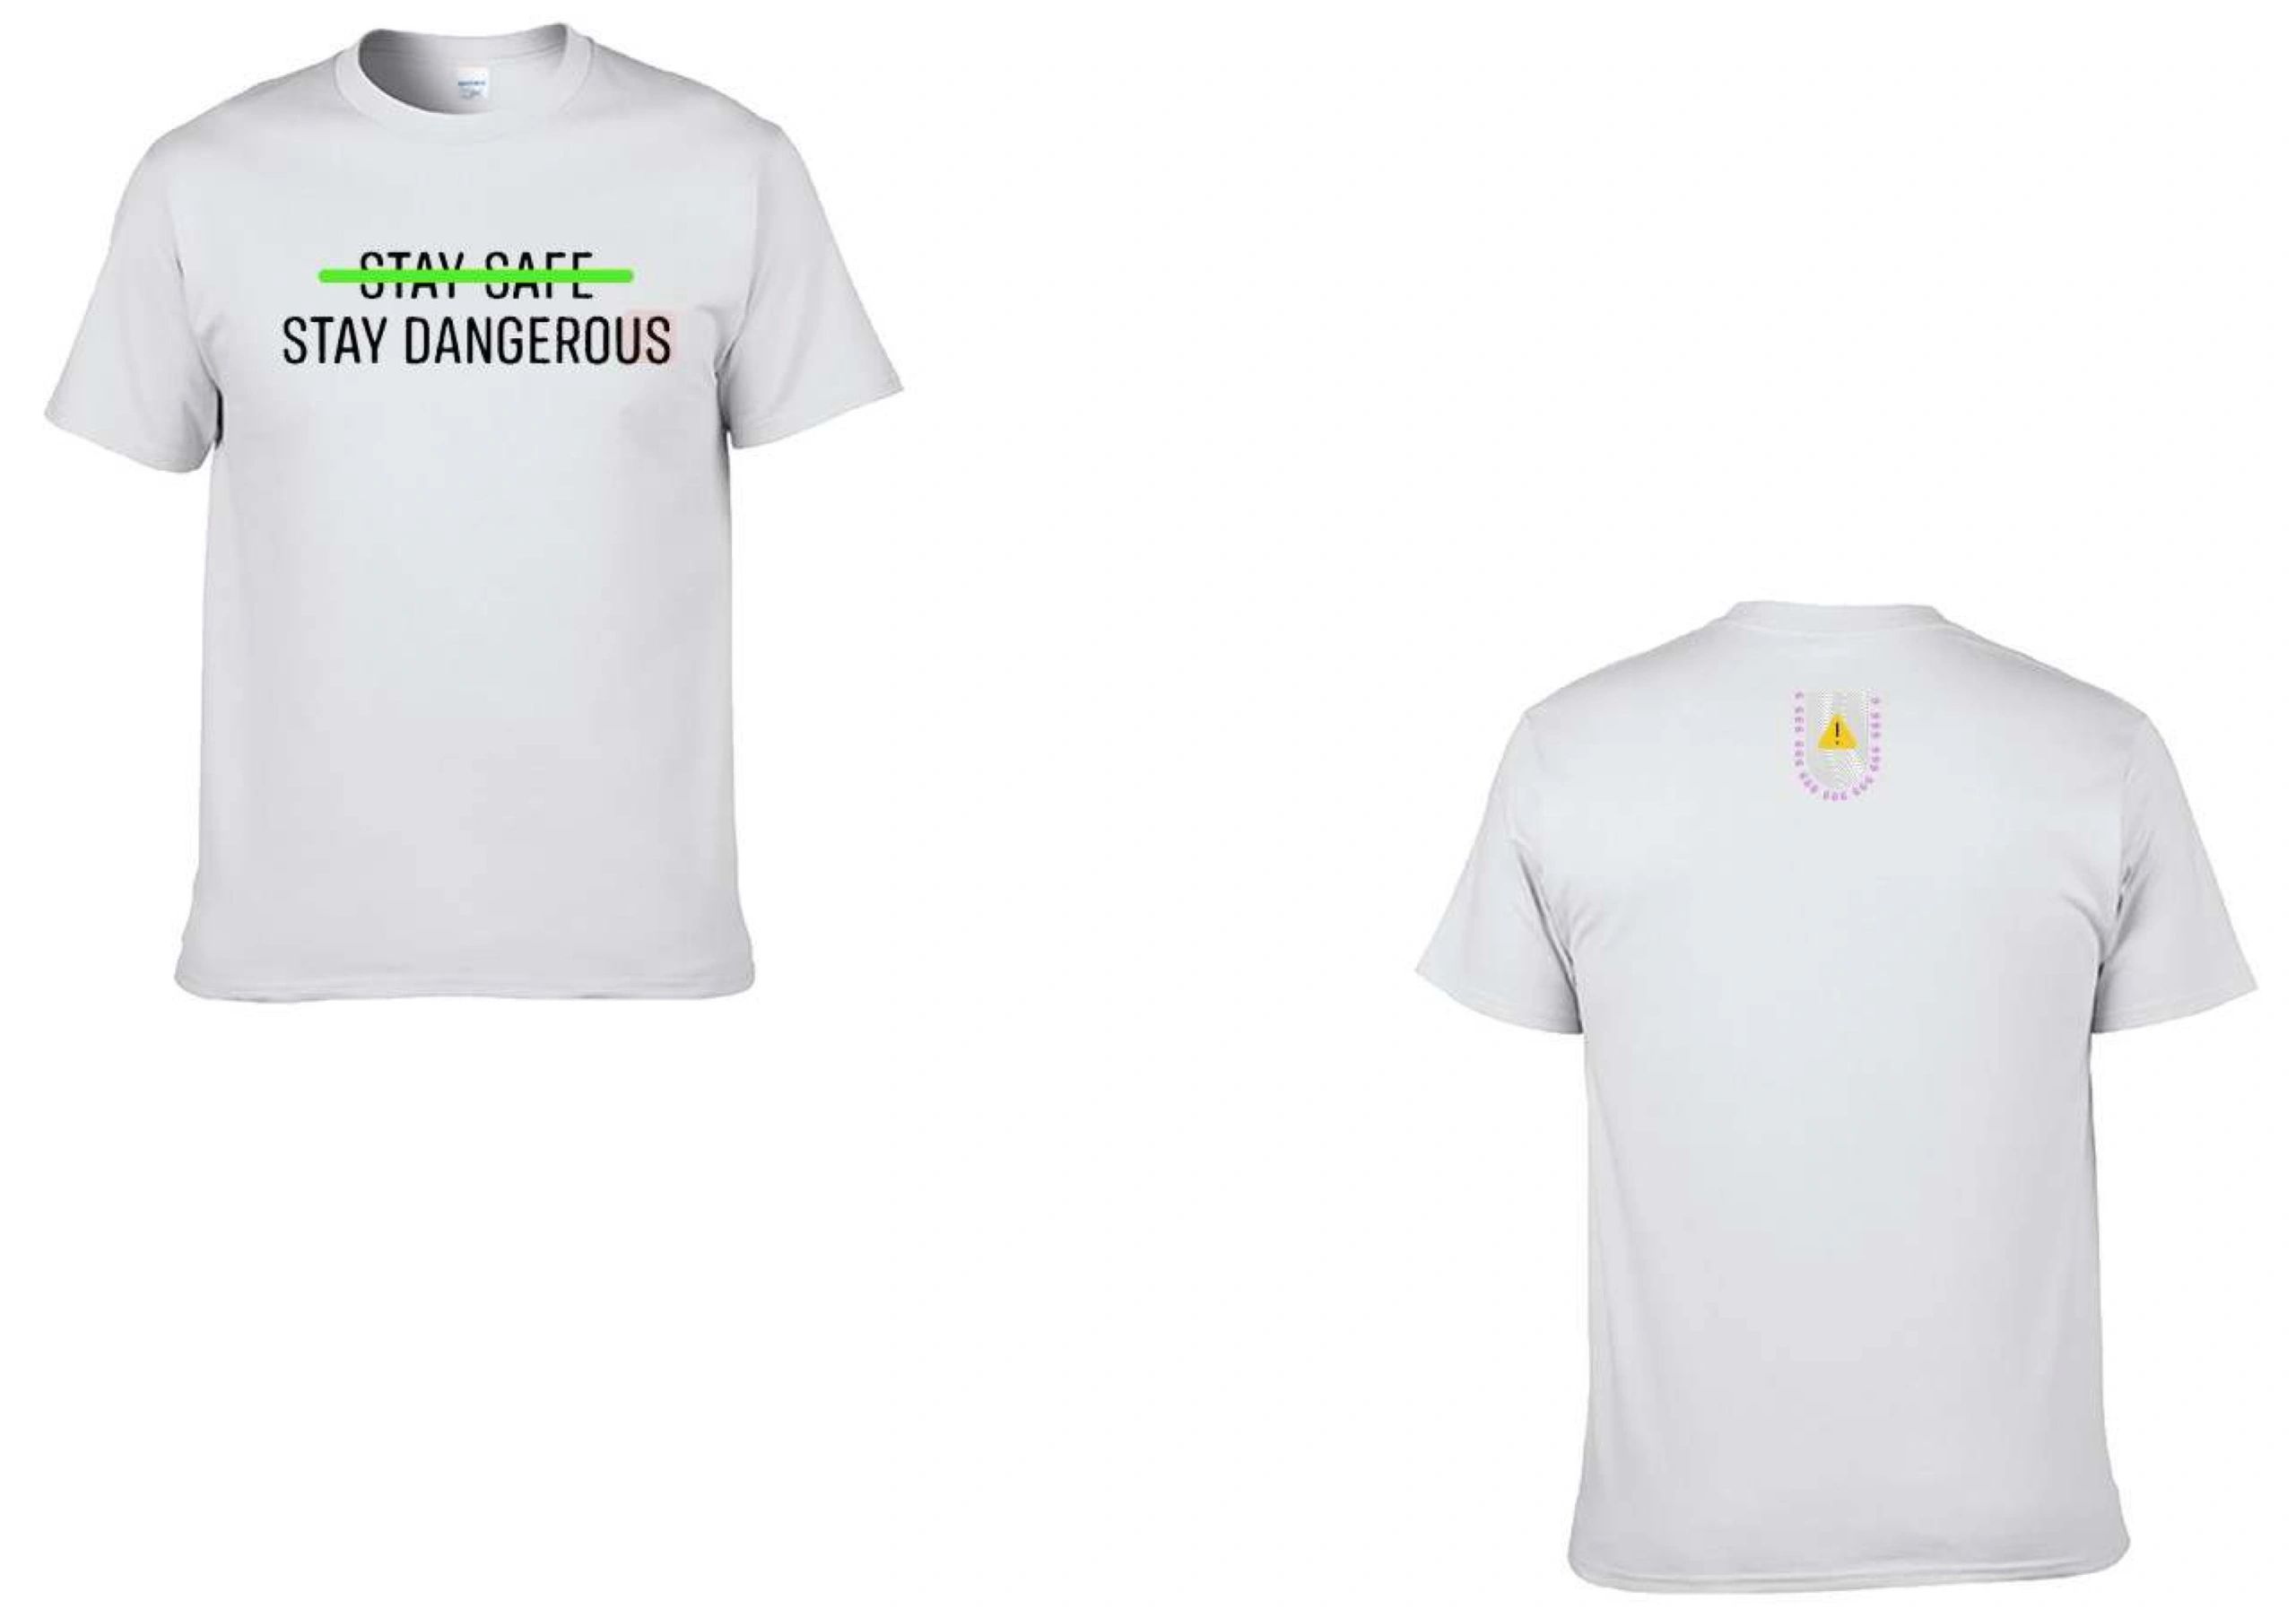 Stay dangerous T-shirts 